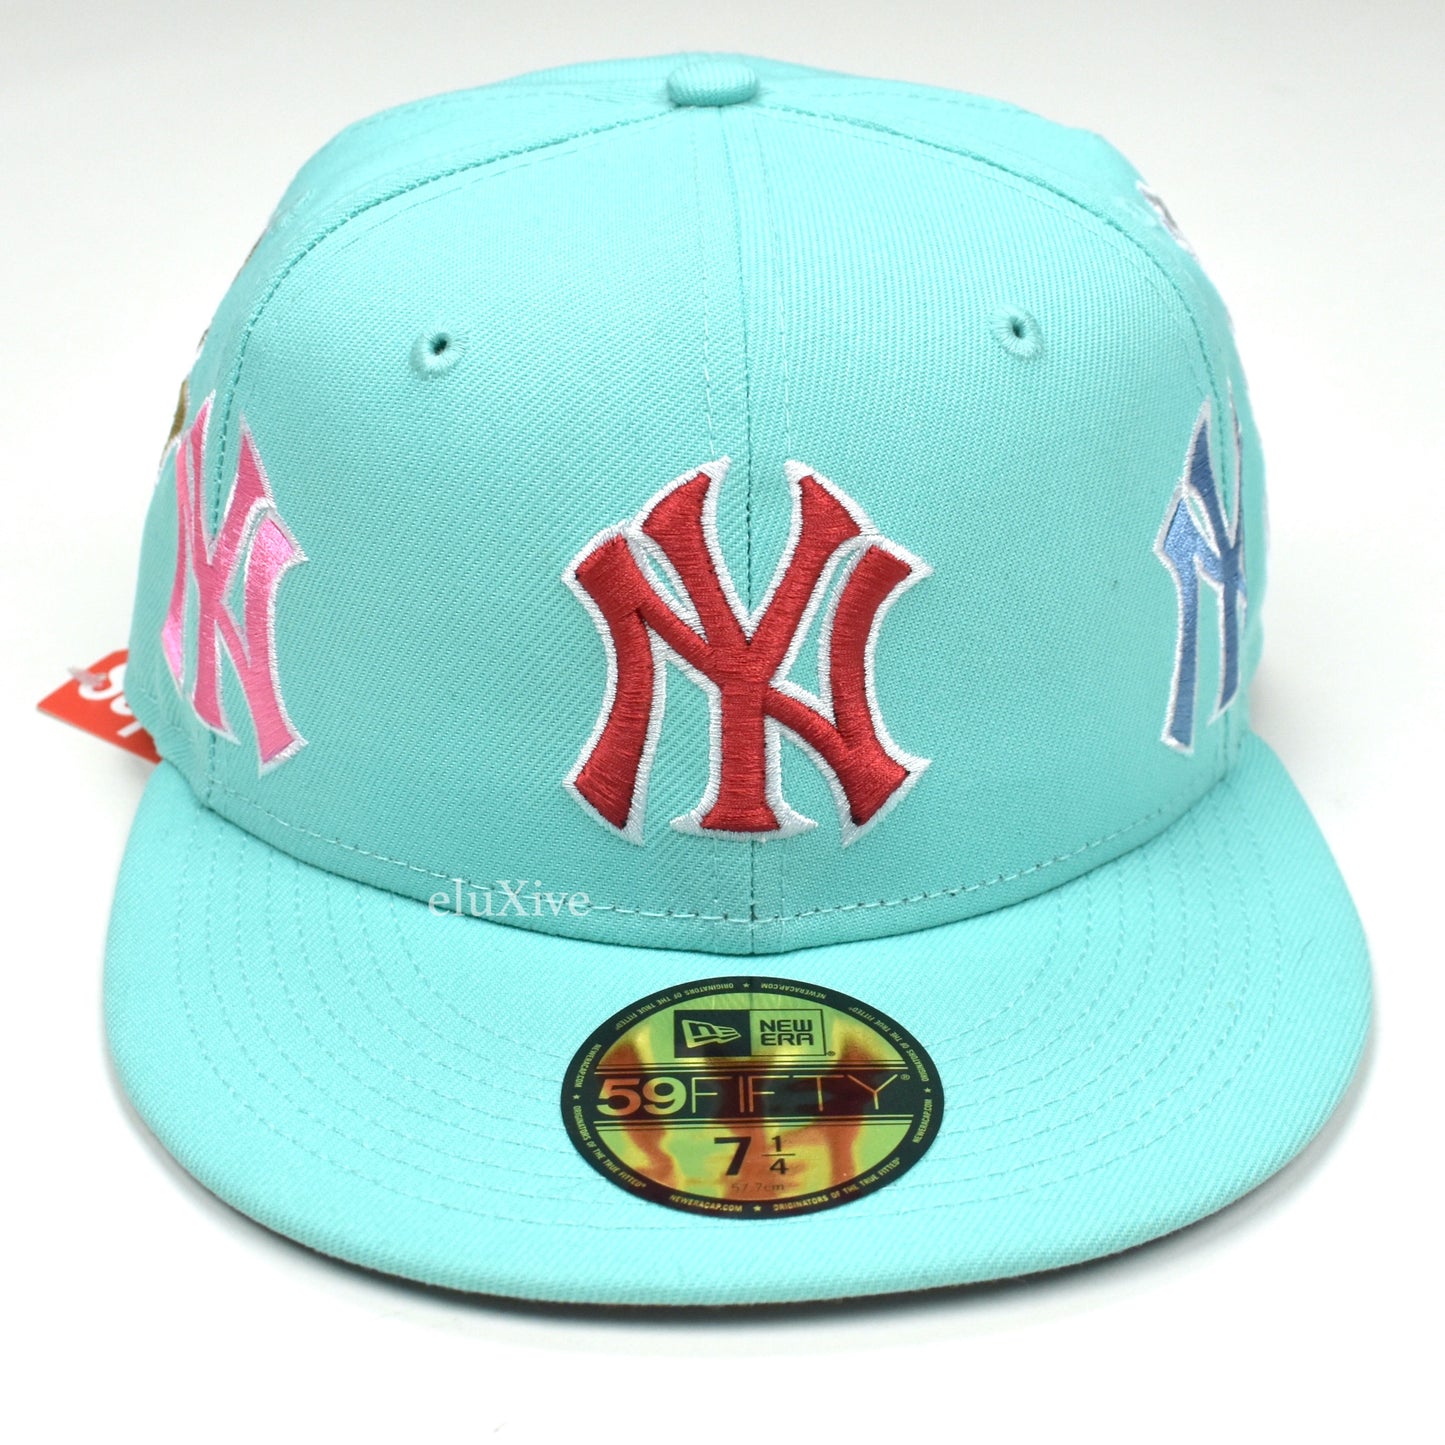 Supreme x New Era - Kanji New York Yankees Fitted Hat (Light Aqua)